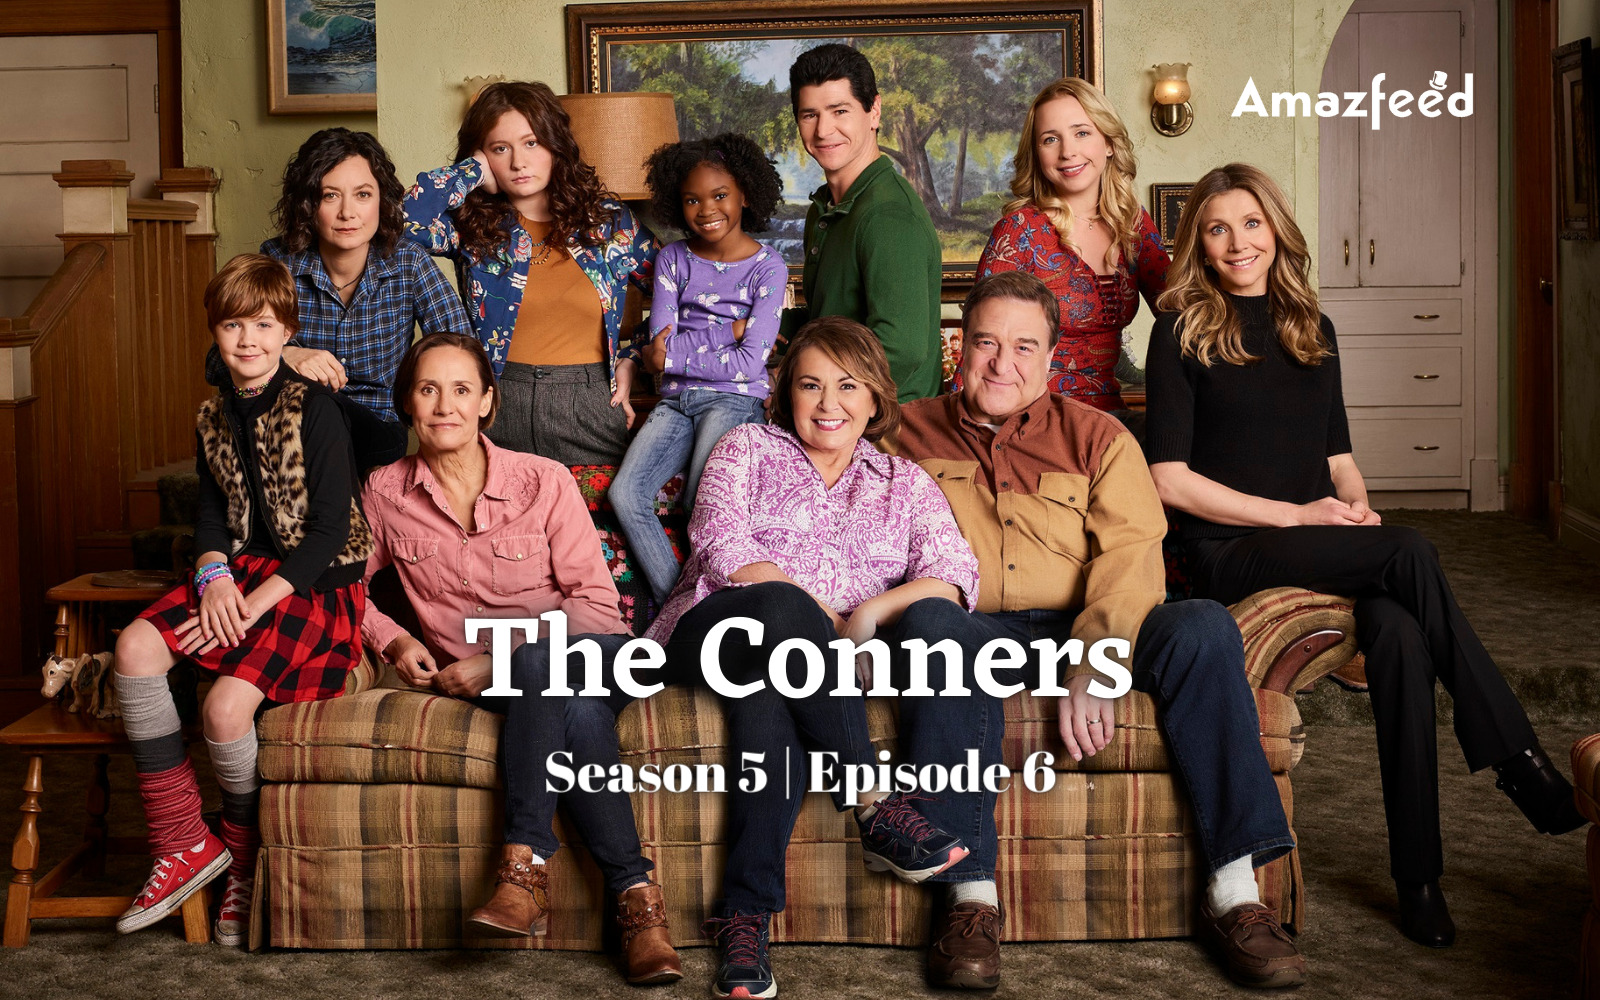 The Conners Season 5 Episode 6.1